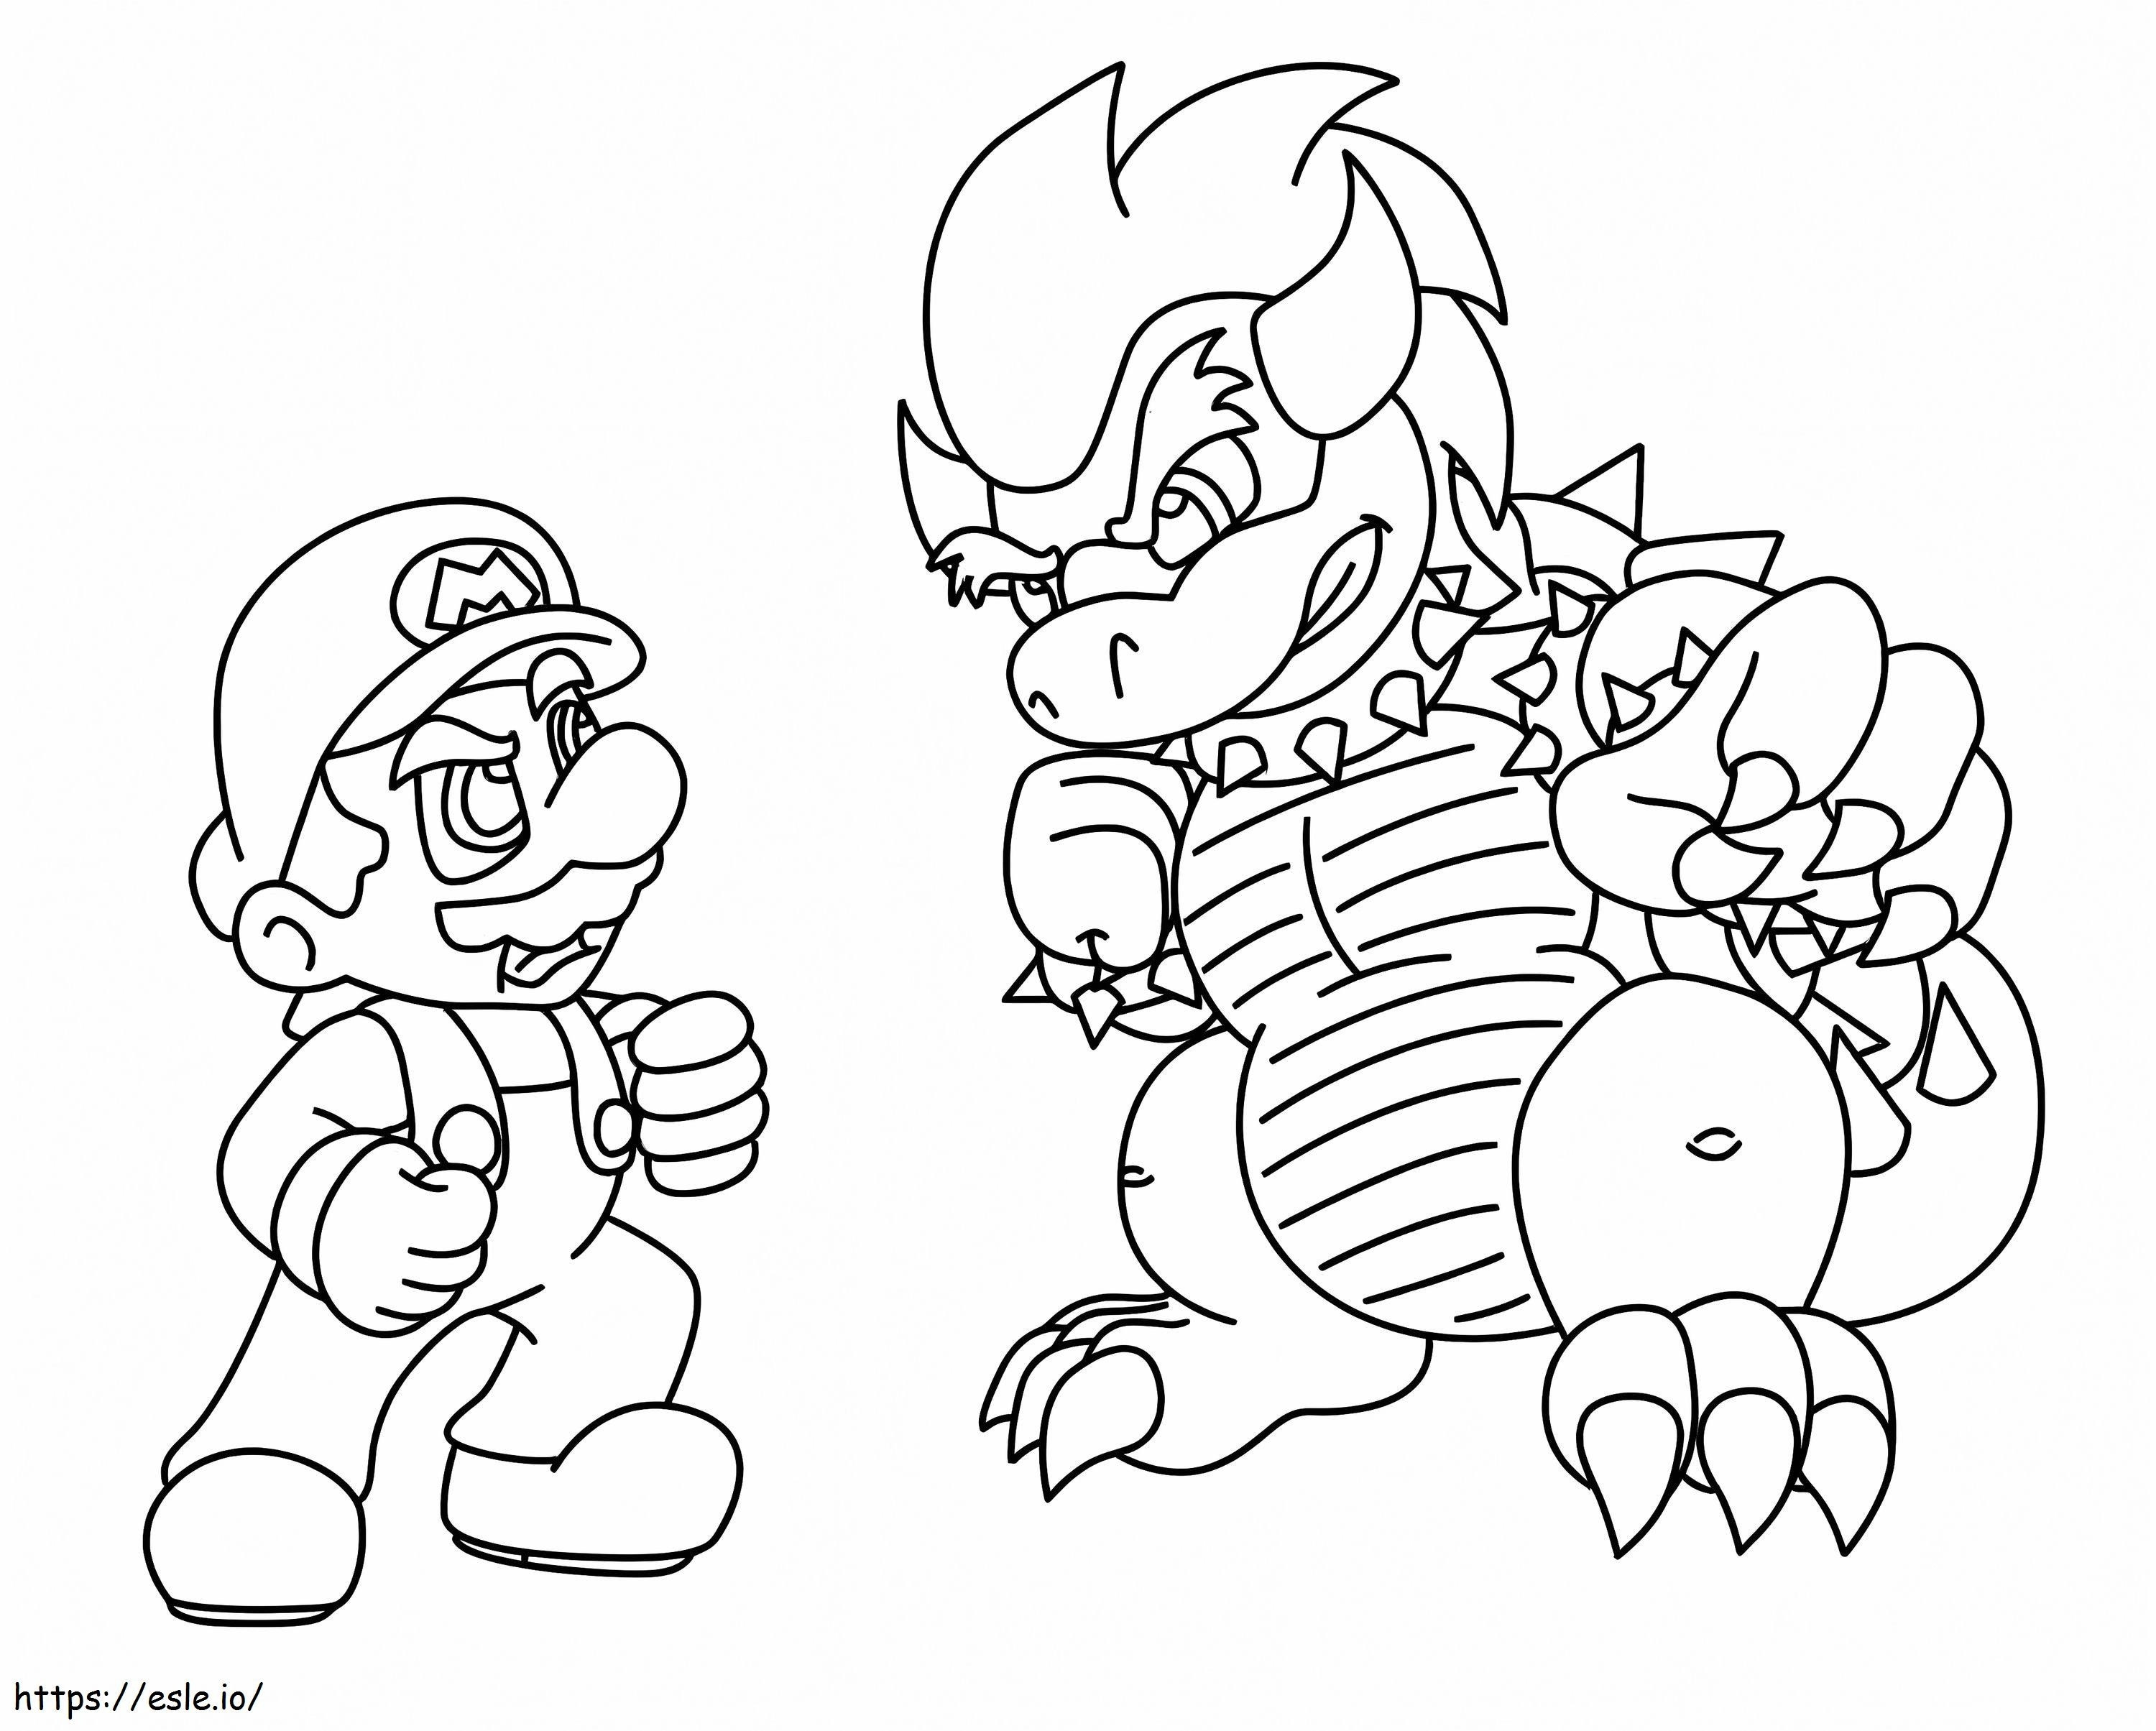 Mario vs. Bowser ausmalbilder